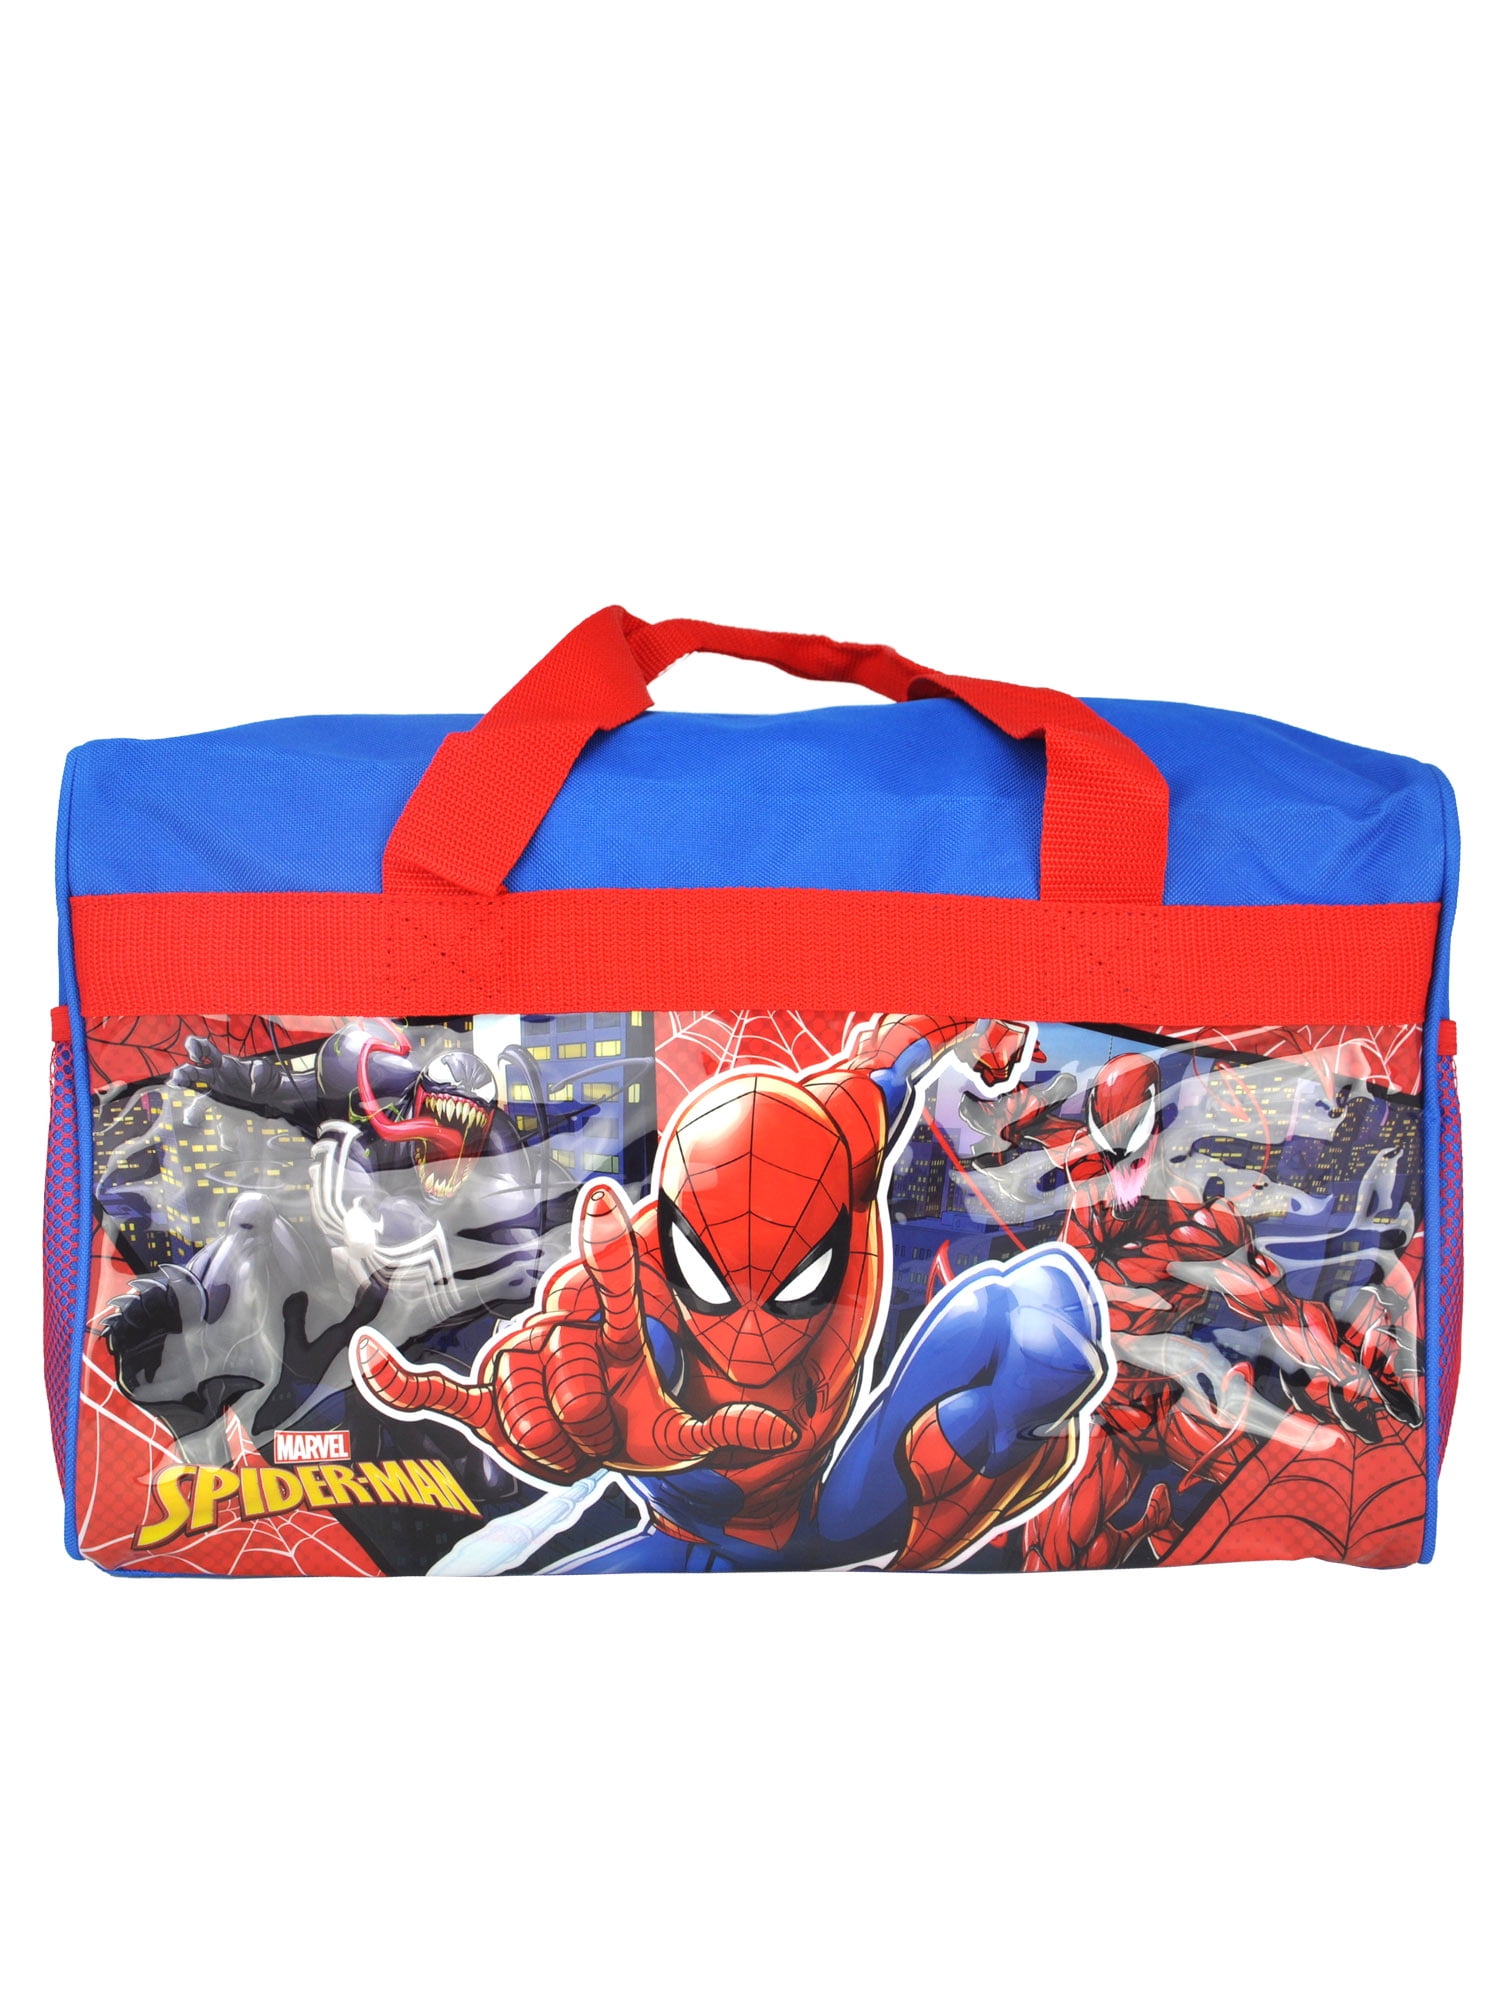 Red Marvel Spiderman Sportbag 